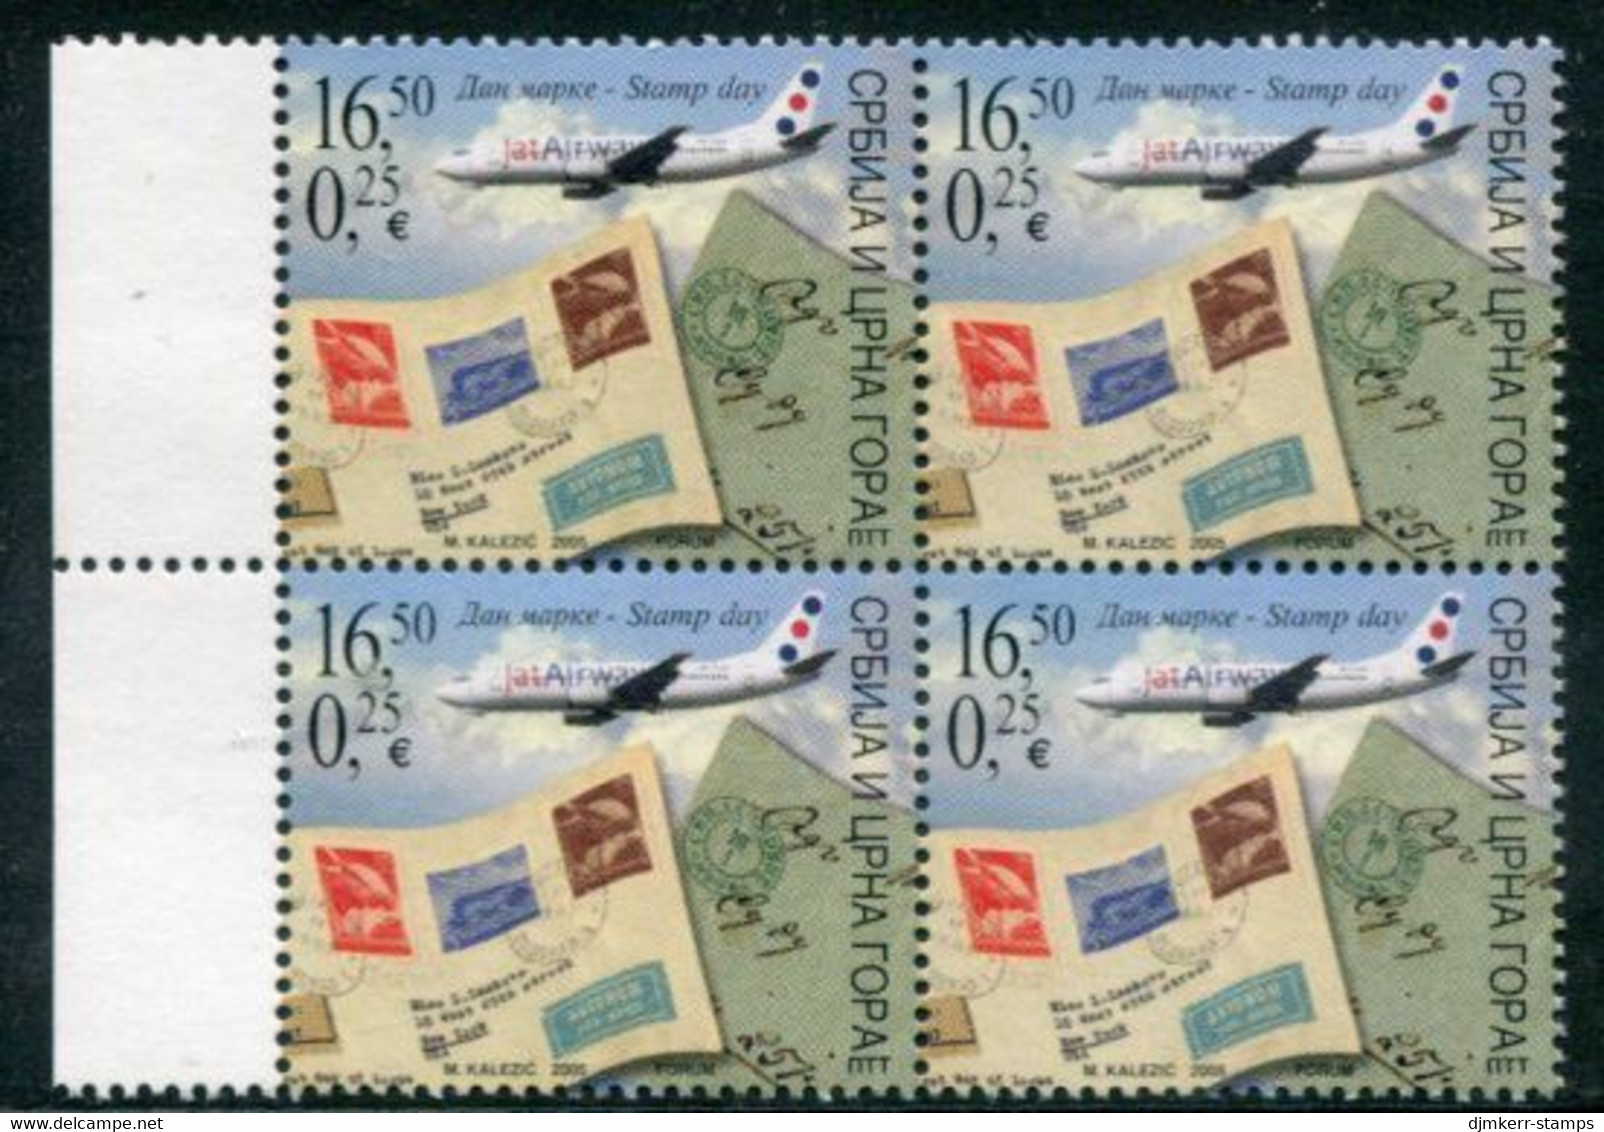 YUGOSLAVIA (Serbia & Montenegro)  2005 Stamp Day Block Of 4 MNH / **.  Michel 3295 - Nuovi